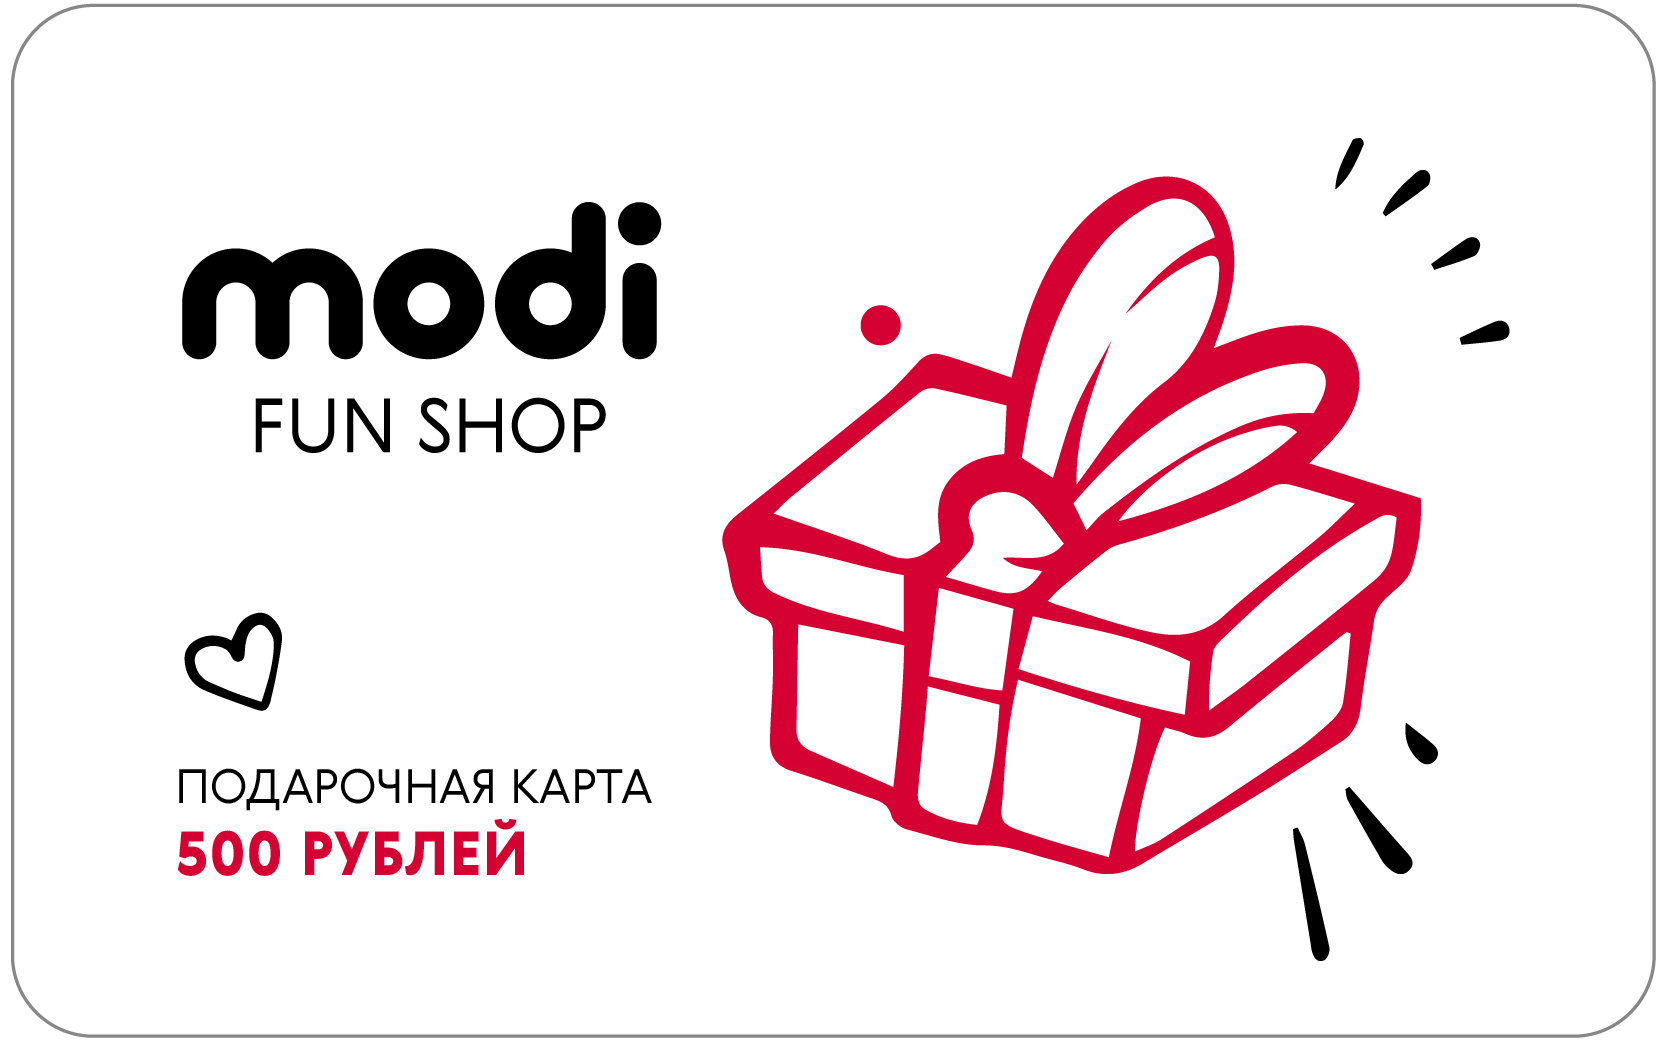 Mine fun shop. Modi магазин логотип. Магазин Modi fun shop. Modi fun shop карта. Подарочный сертификат Modi.